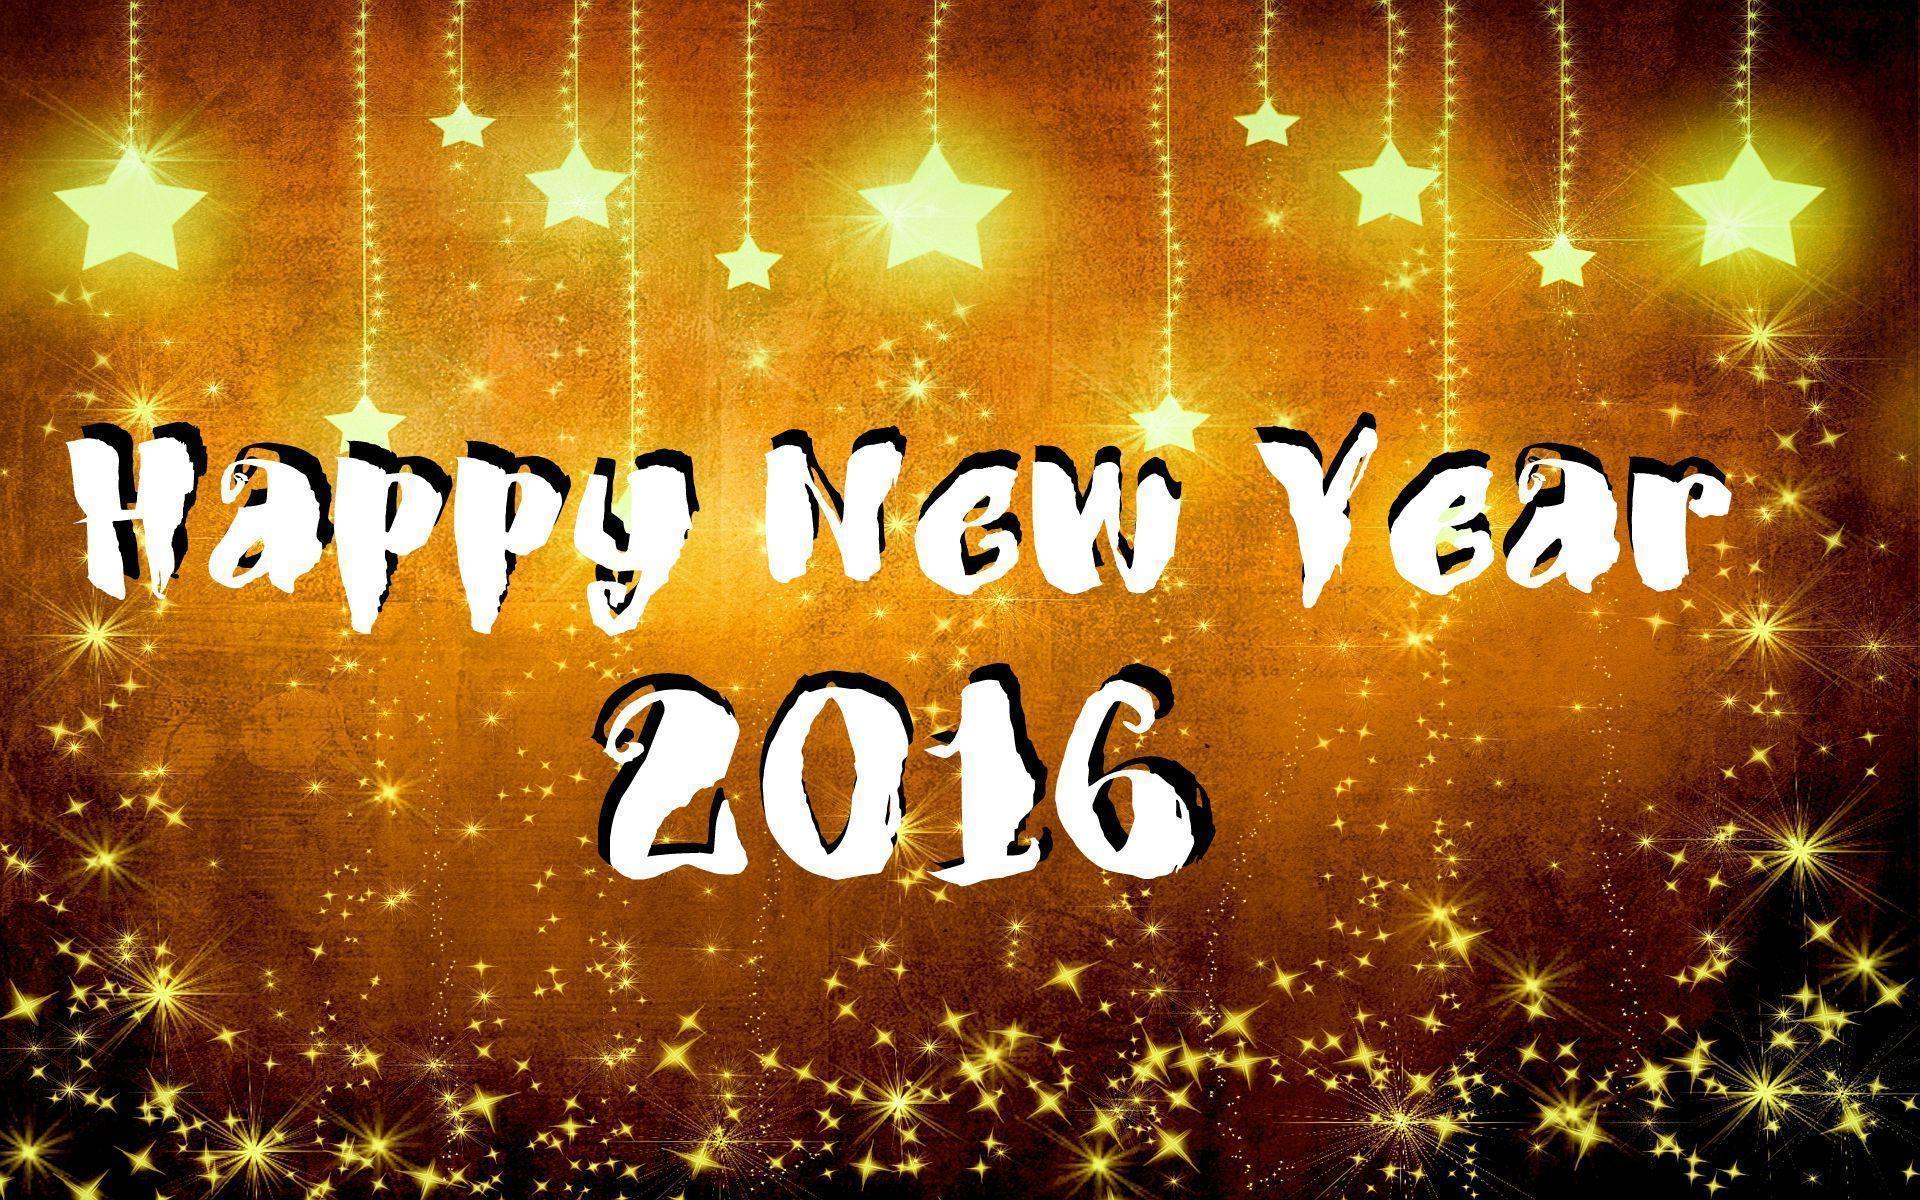 Happy New Year 2016 HD Wallpaper Free